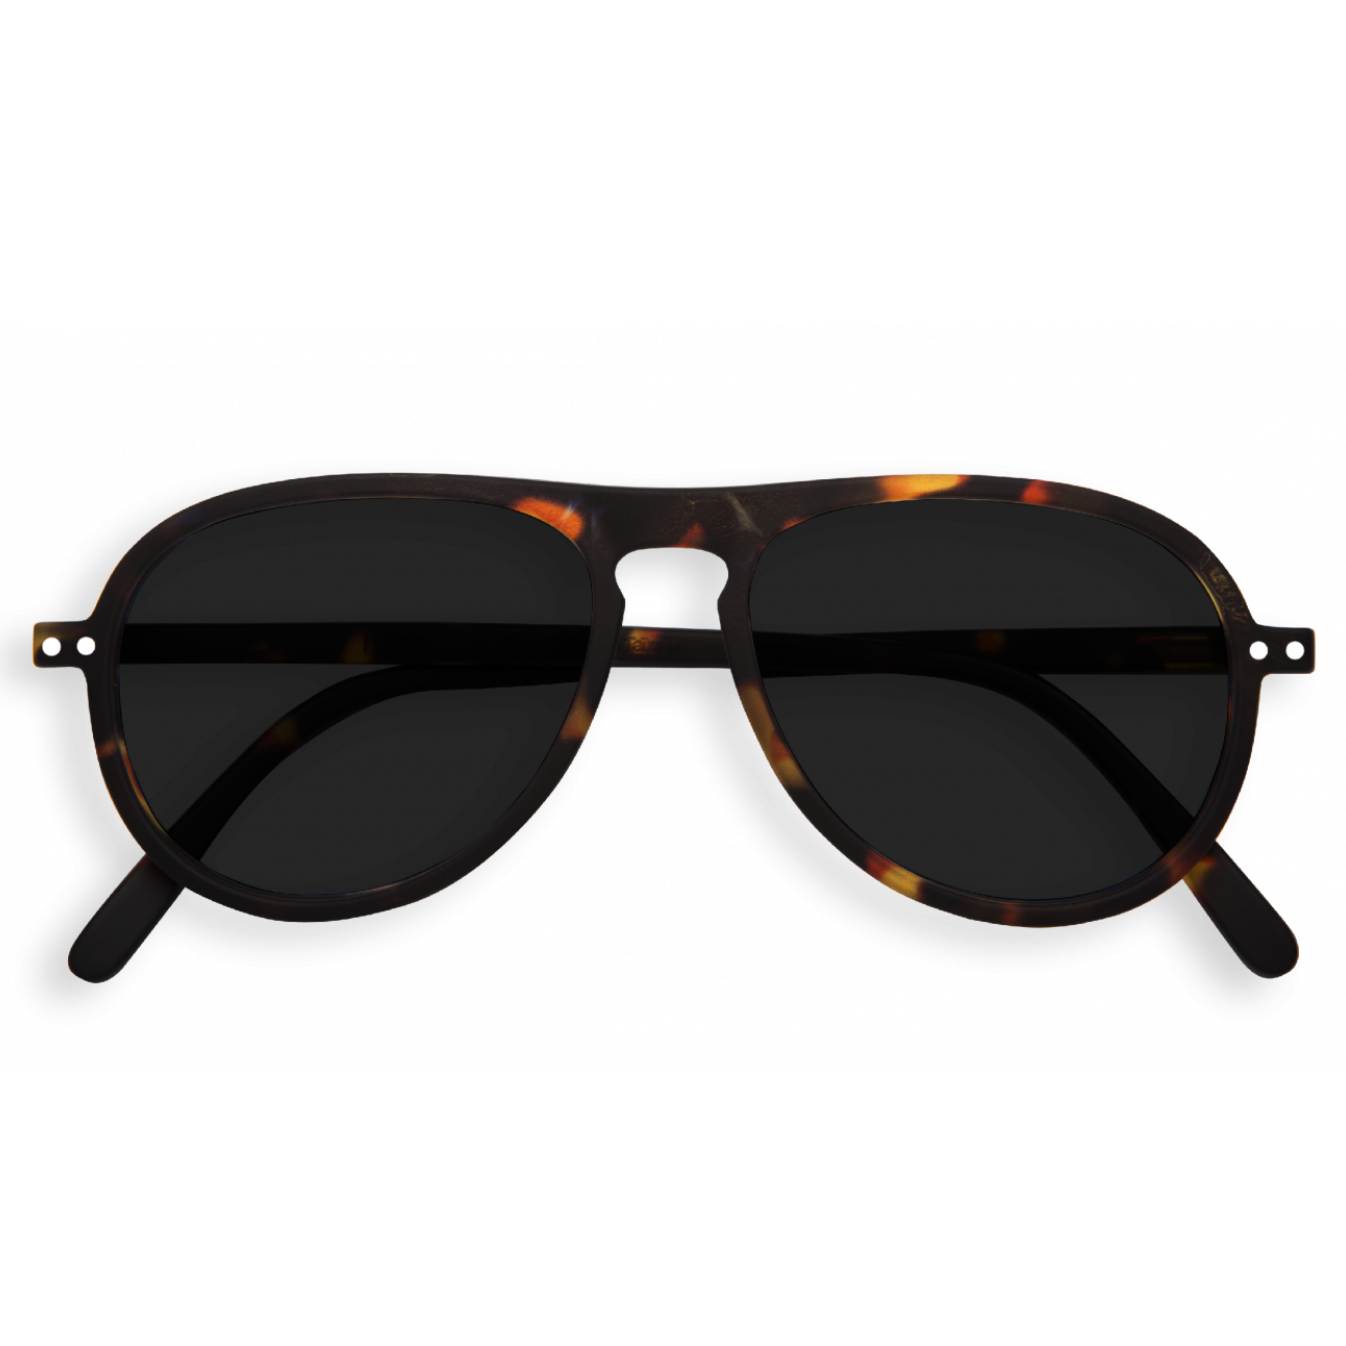 Sunglasses #I - The Aviator - Tortoise